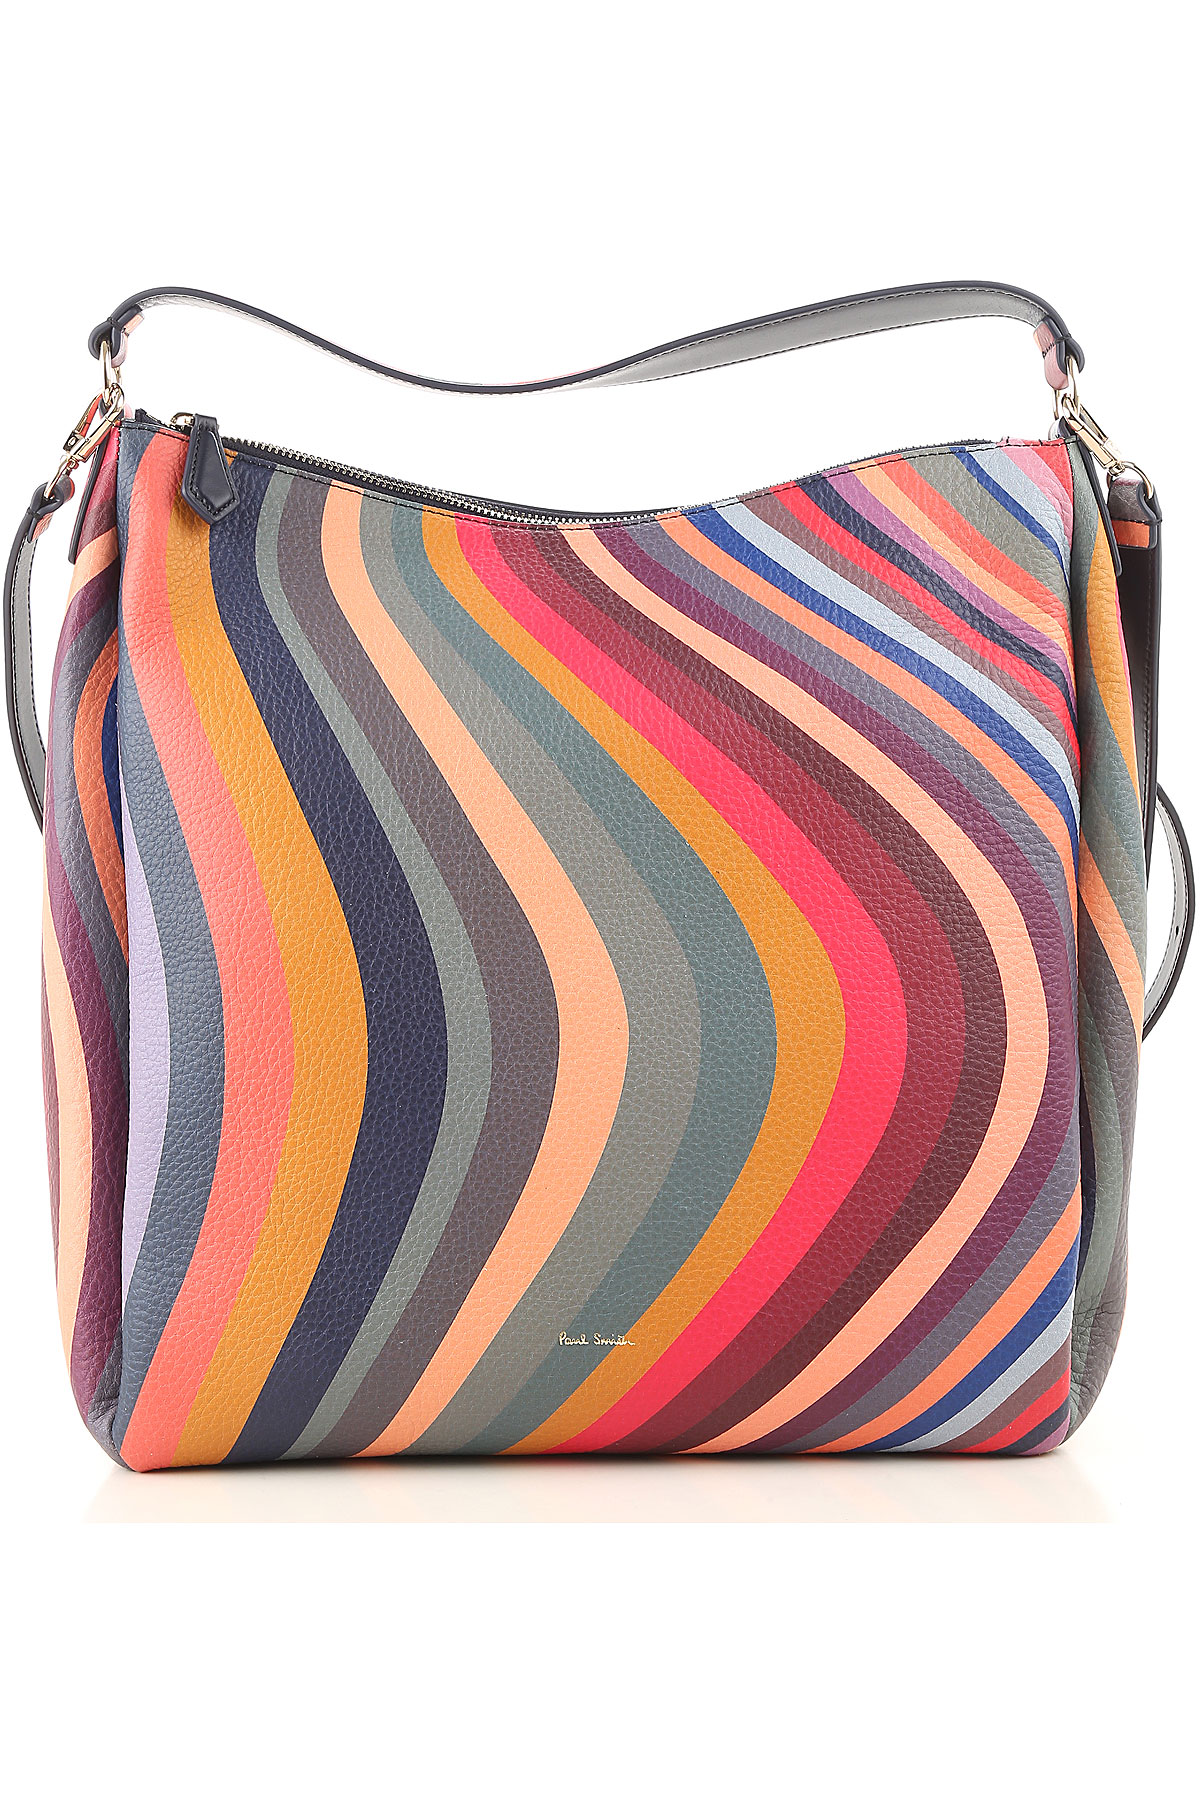 Handbags Paul Smith, Style code: wuxc-5438-l920